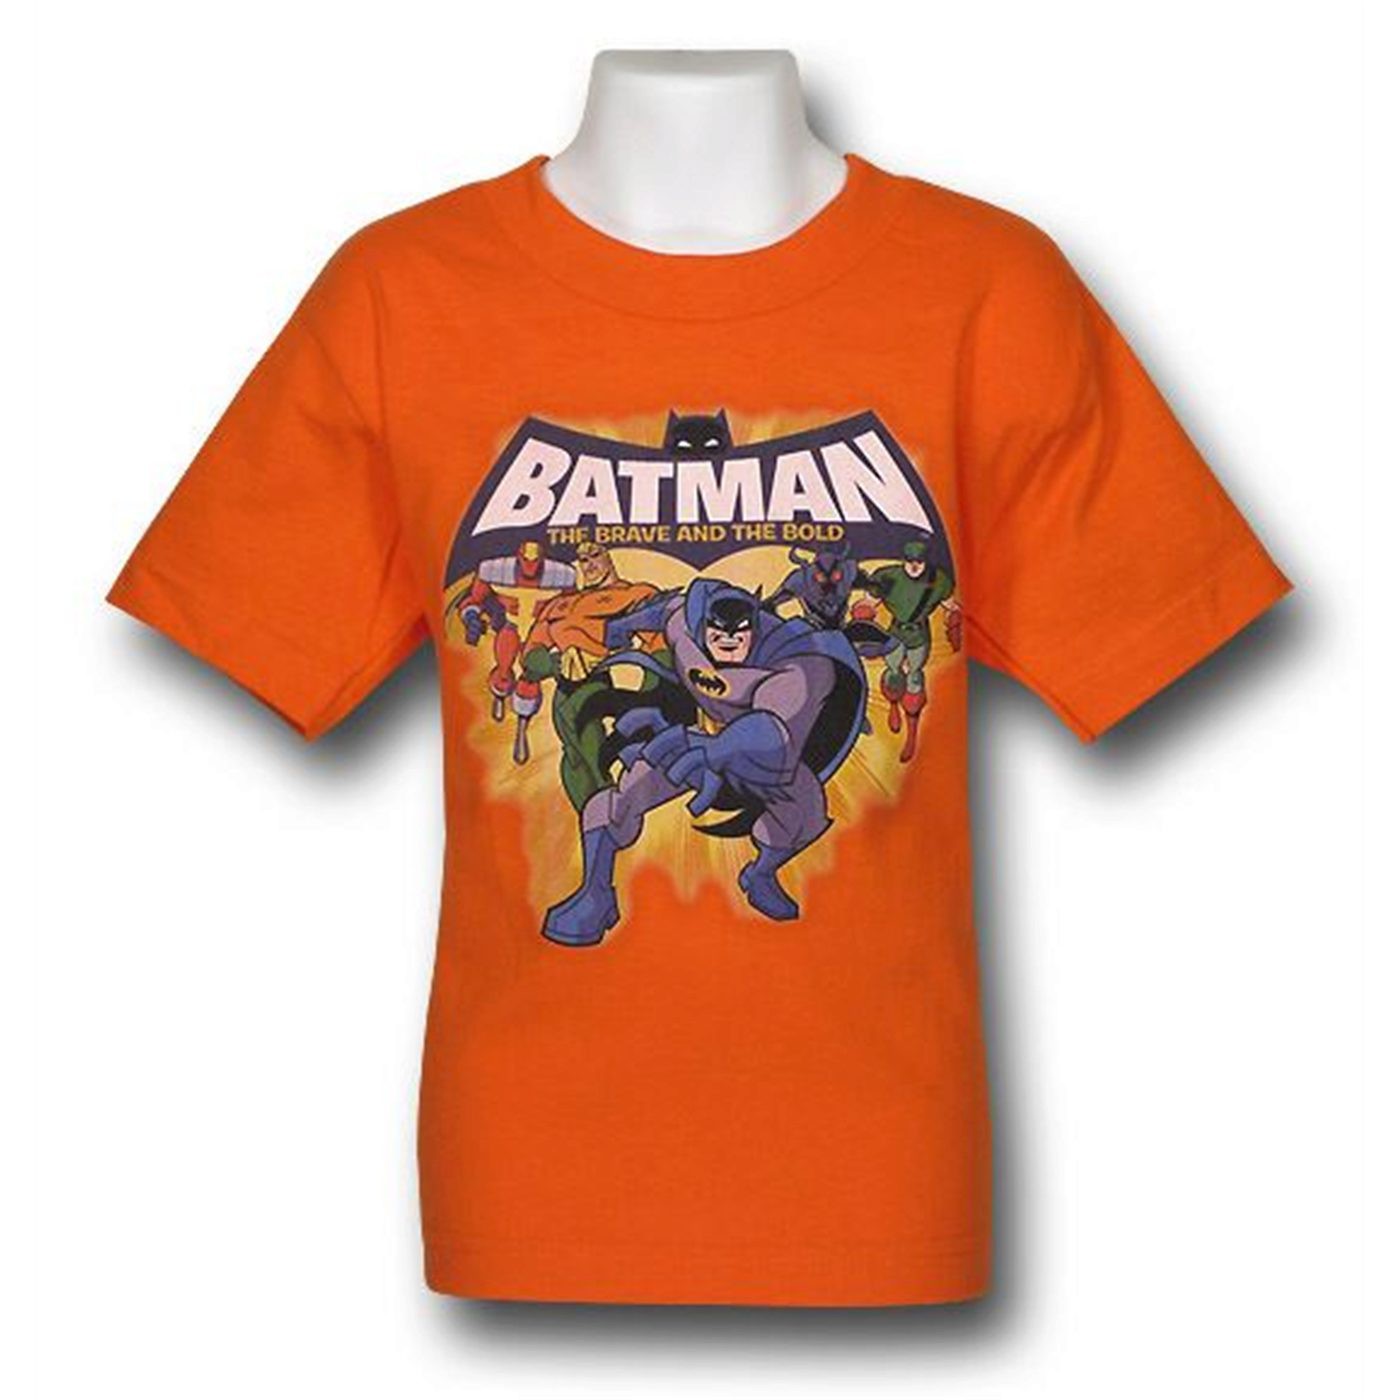 Batman Kids  Brave &  Bold Group T-Shirt